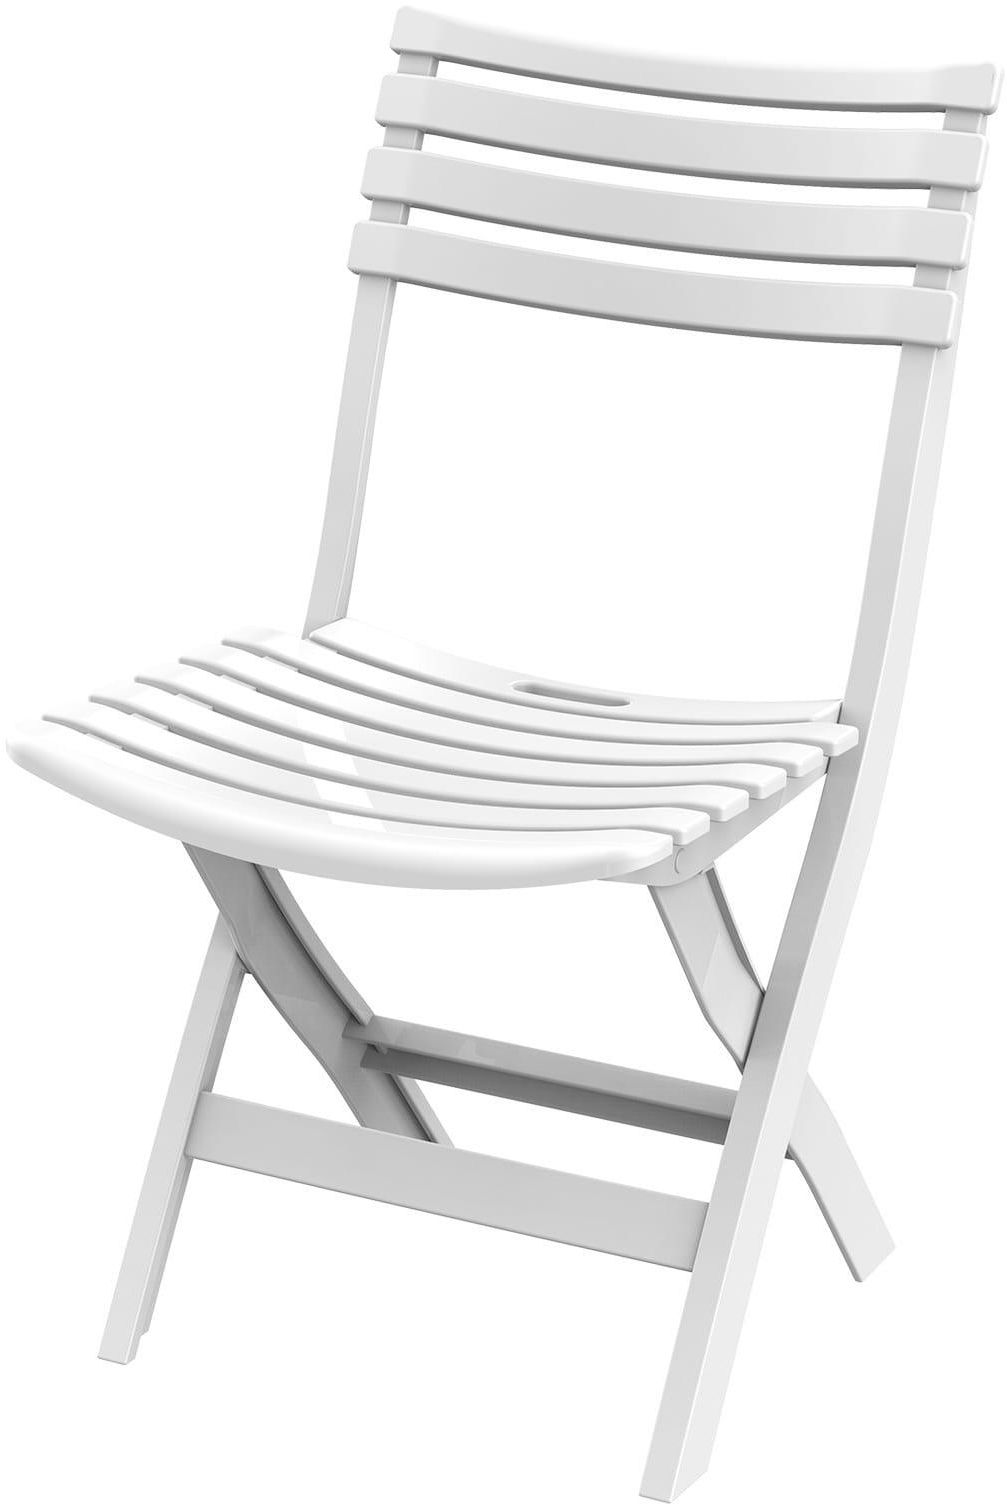 Cosmoplast plastic folding chair - white